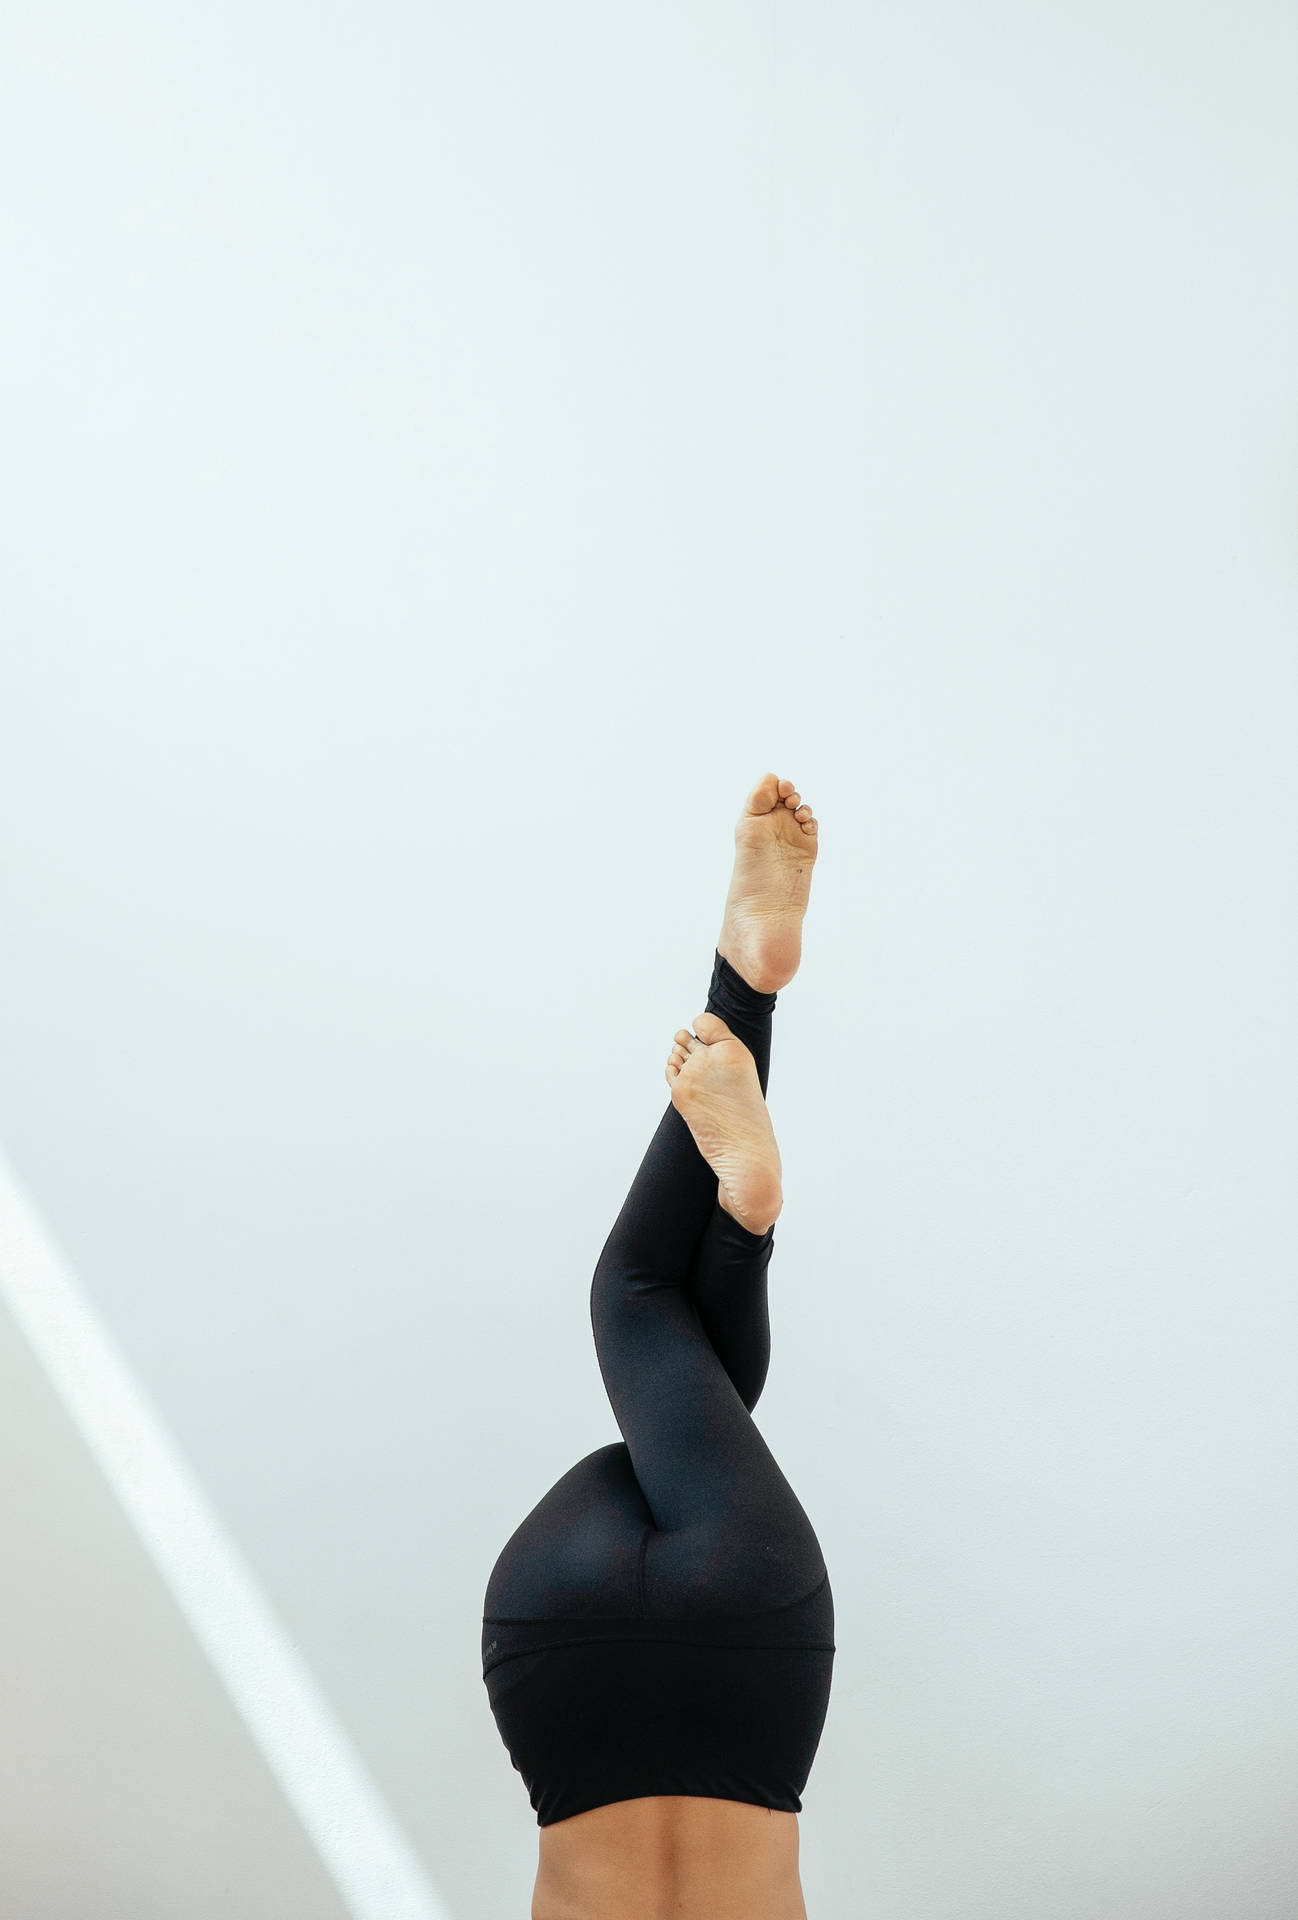 Lower Body Practicing Balance Background